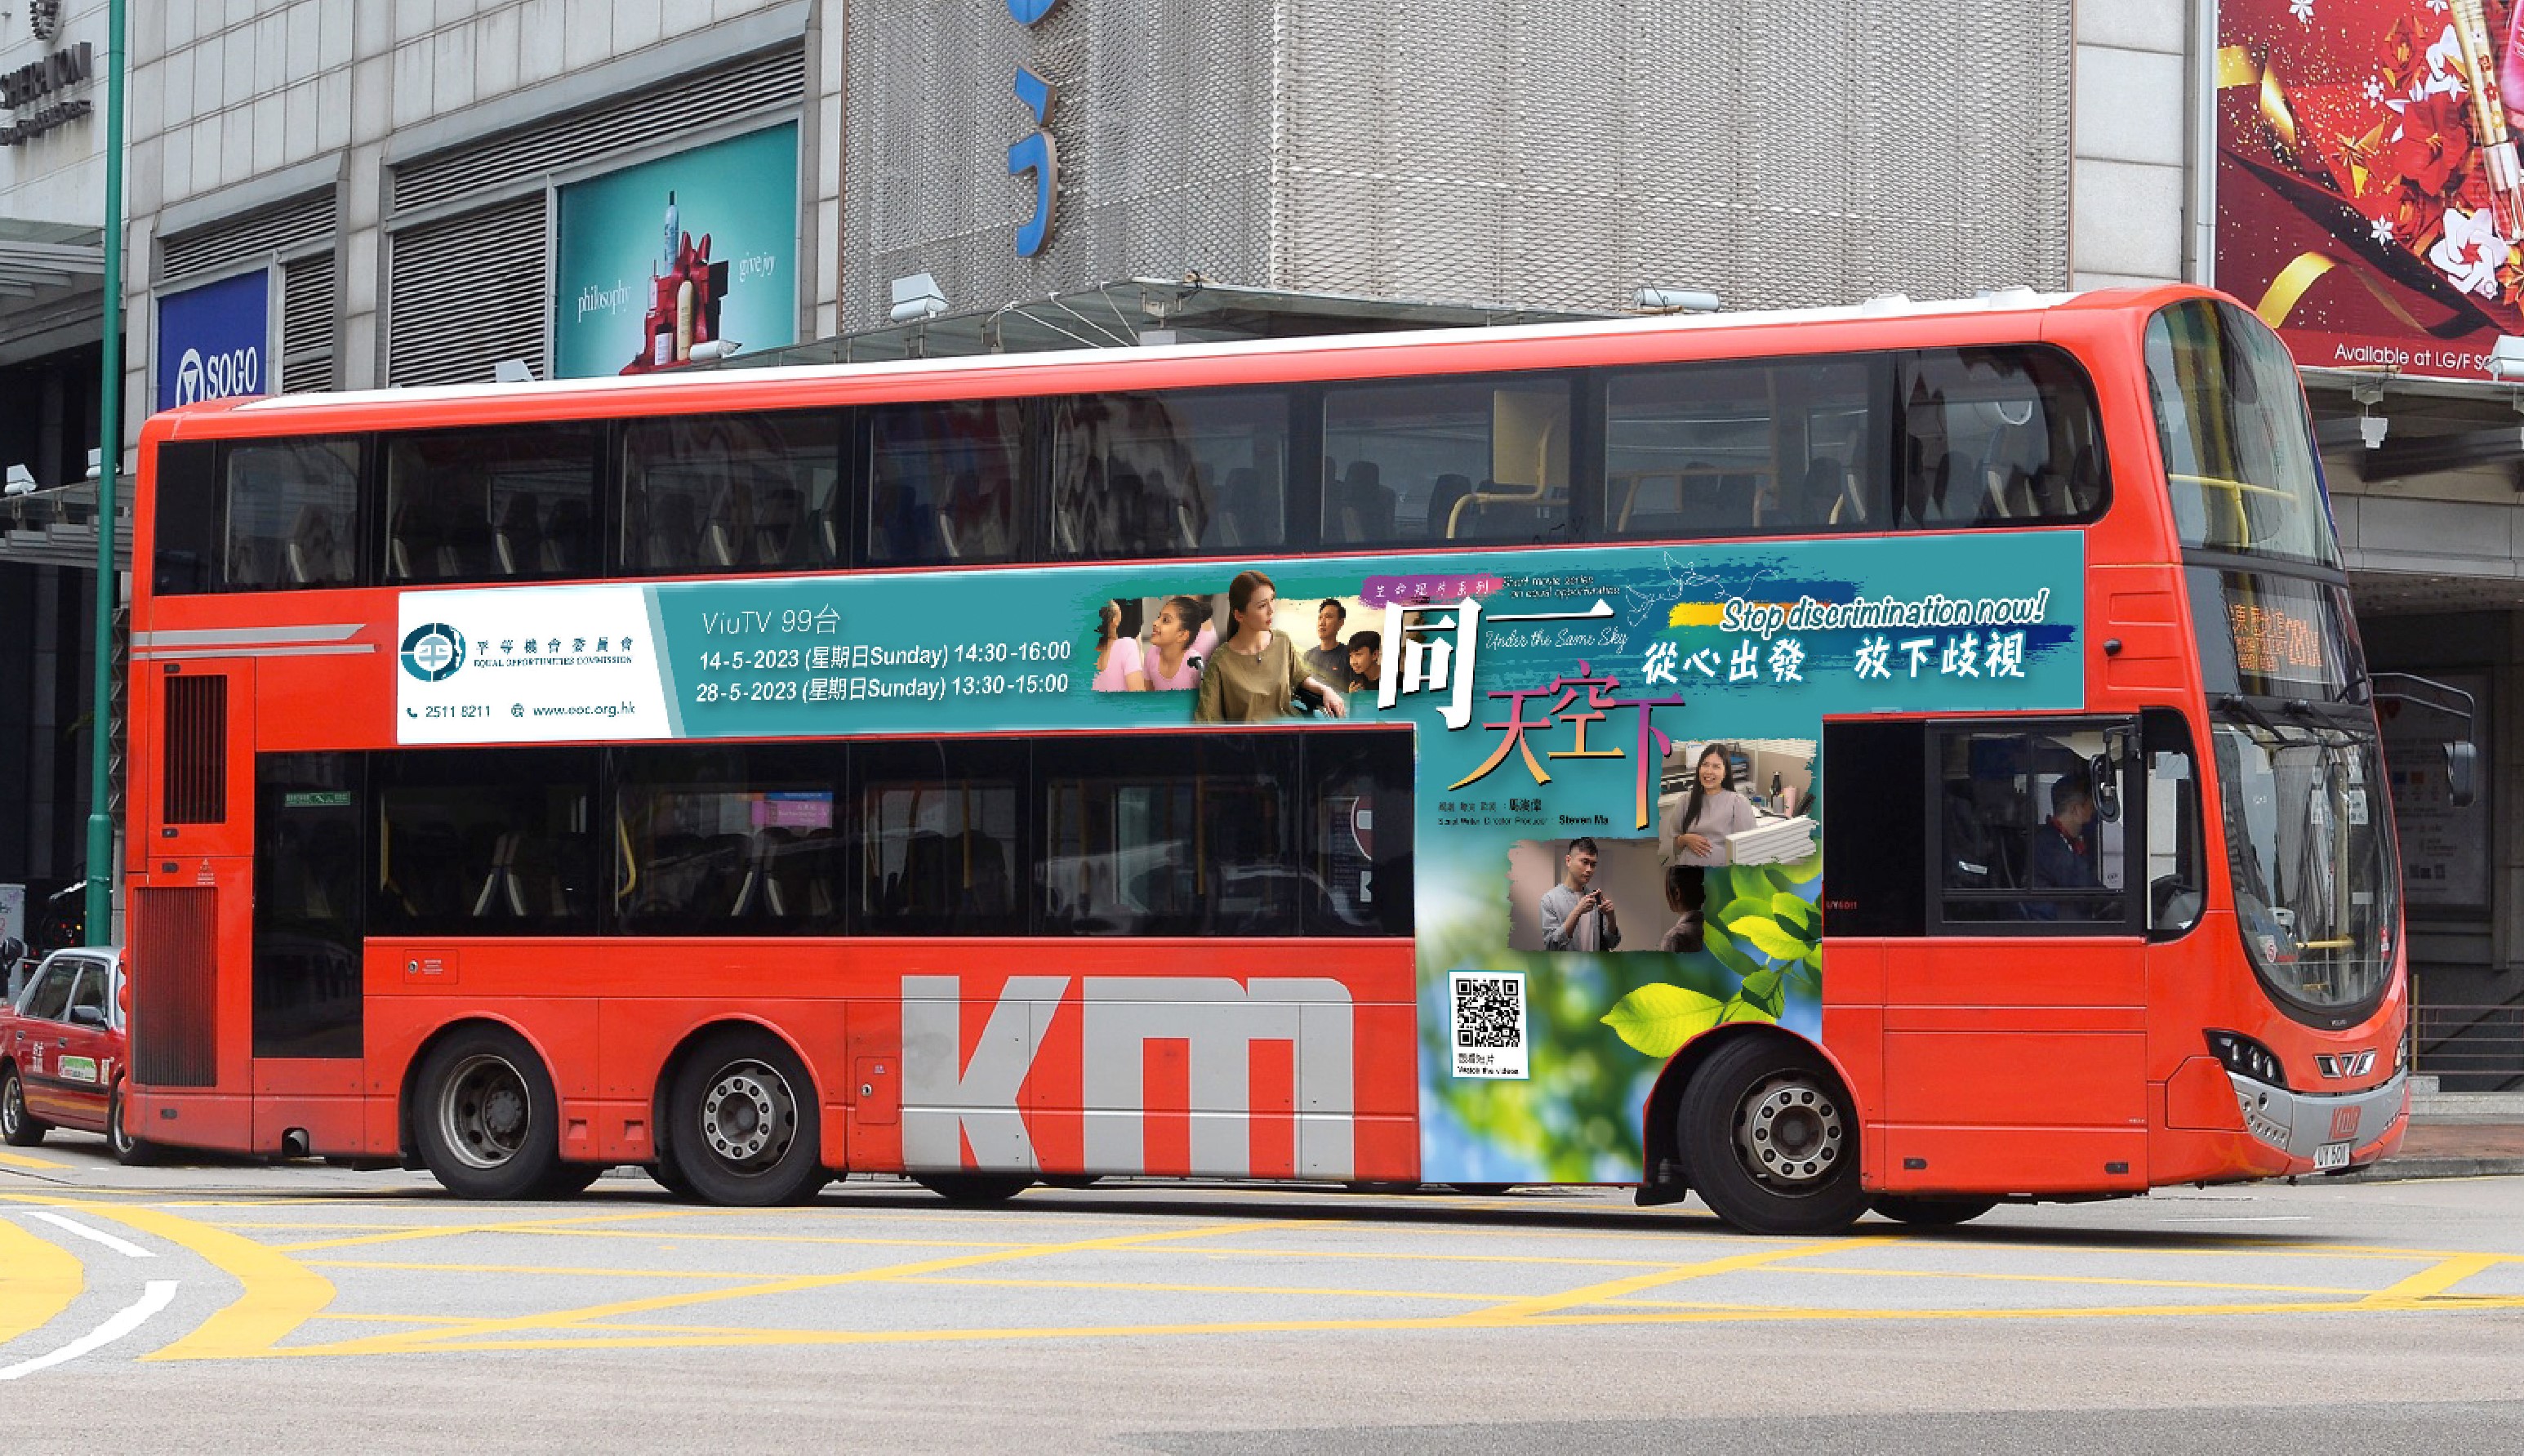 Short Movie Series “Under the Same Sky”: Bus body advertisement